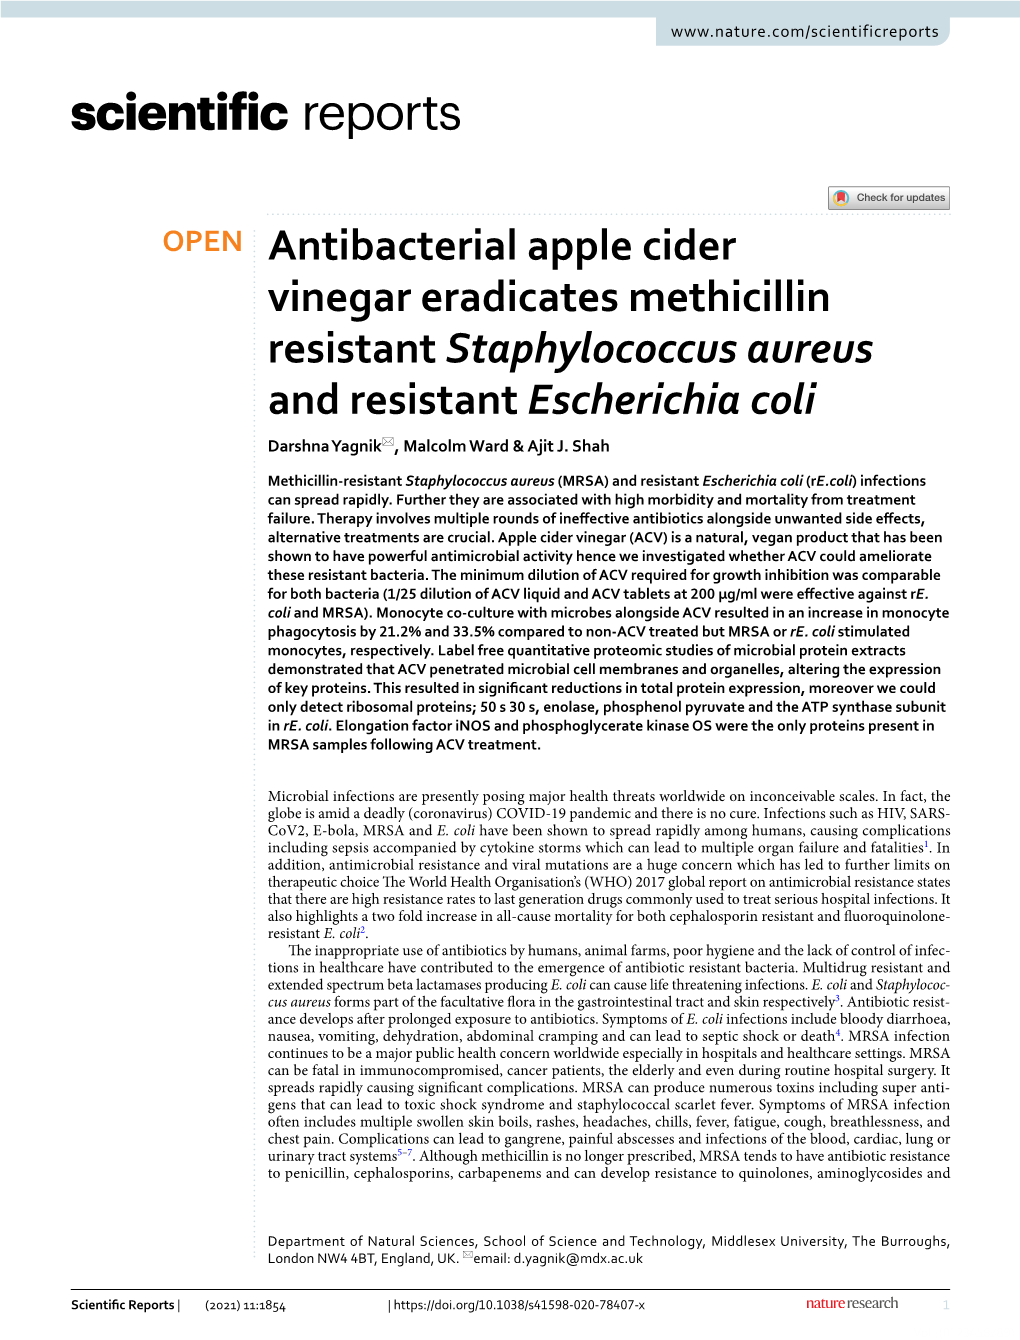 Antibacterial Apple Cider Vinegar Eradicates Methicillin Resistant Staphylococcus Aureus and Resistant Escherichia Coli Darshna Yagnik*, Malcolm Ward & Ajit J